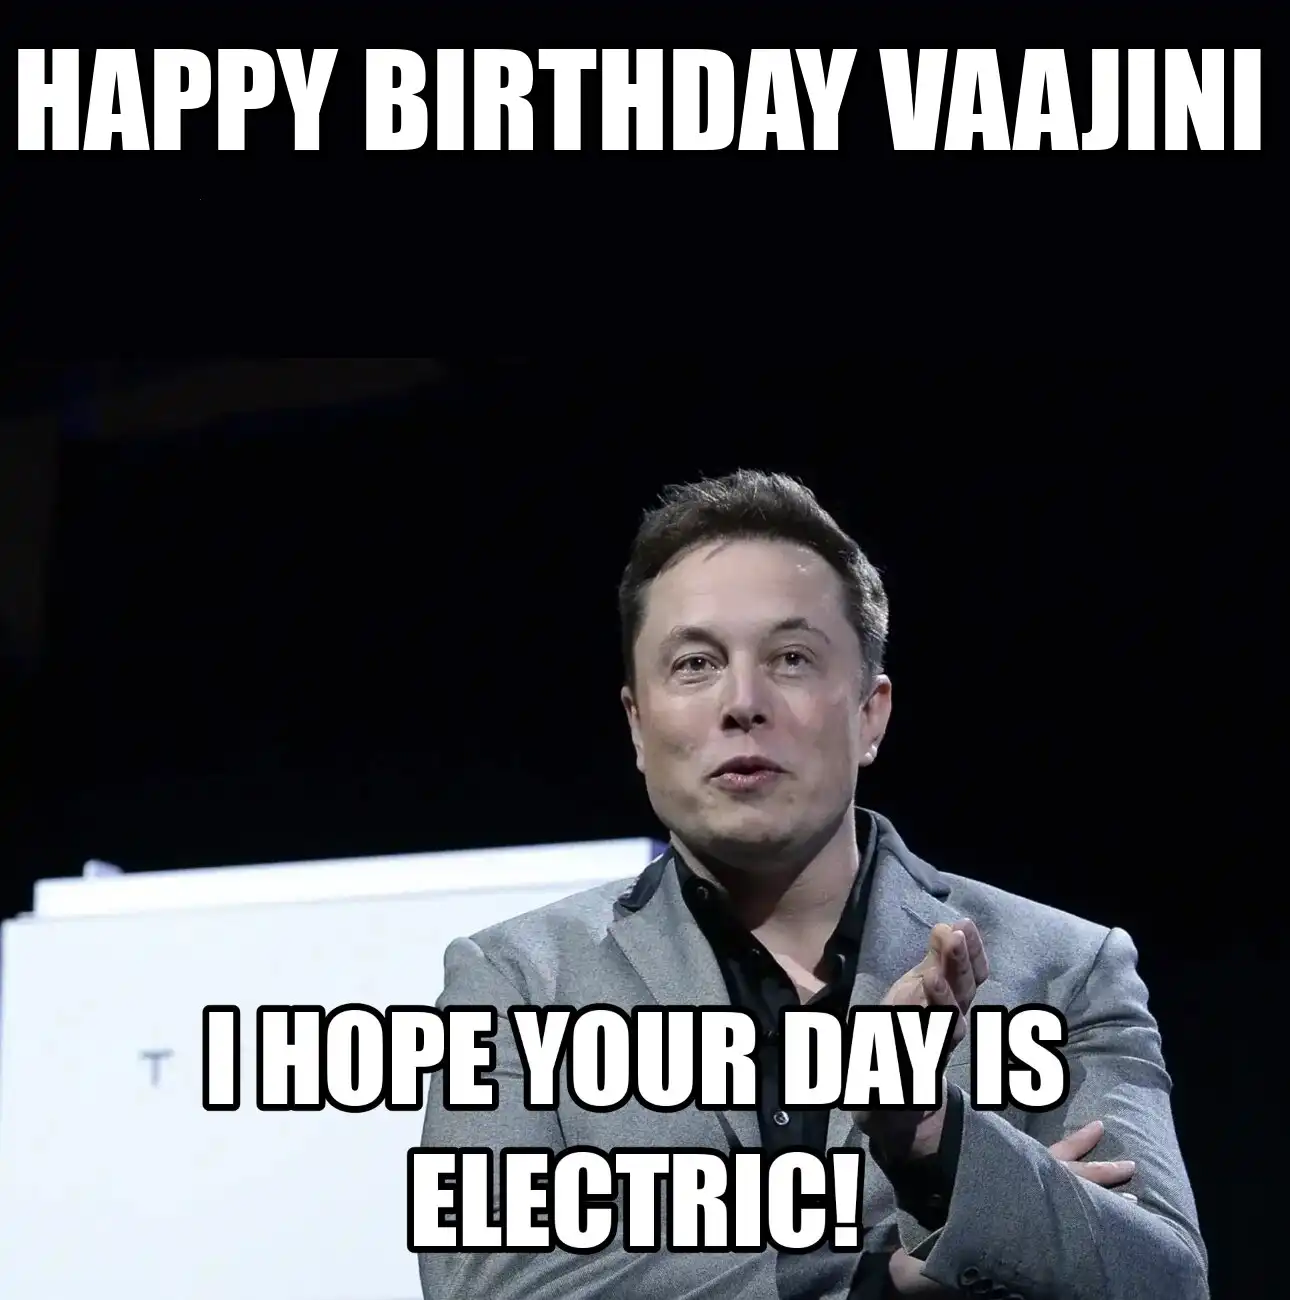 Happy Birthday Vaajini I Hope Your Day Is Electric Meme